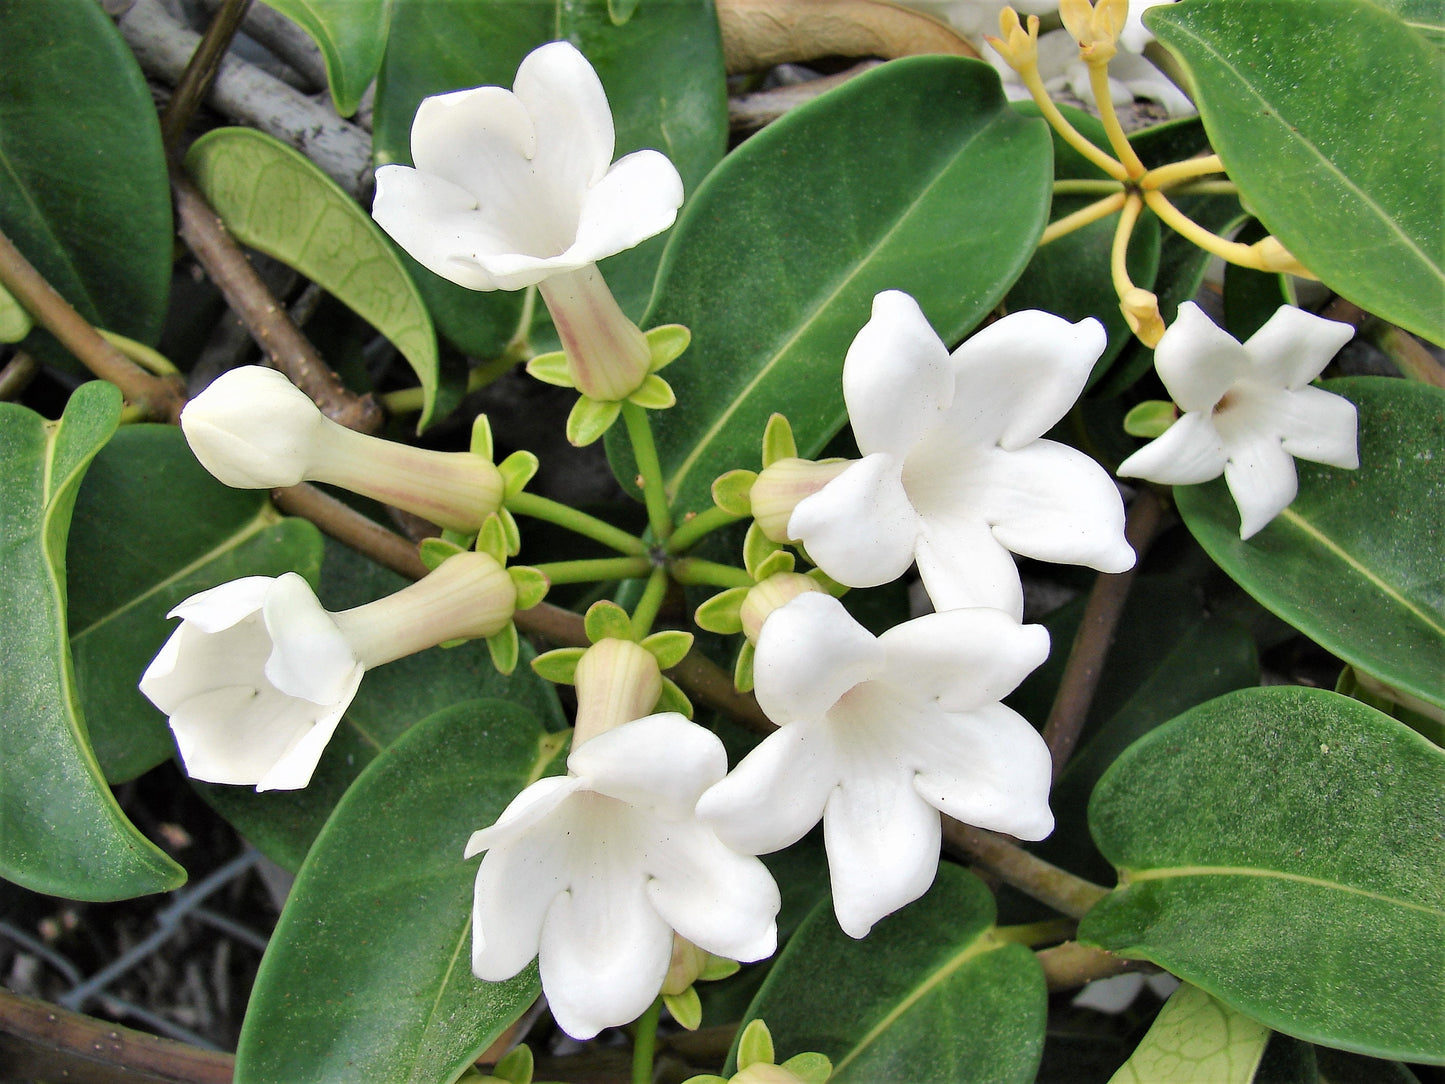 10 MADAGASCAR JASMINE Vine Stephanotis Floribunda Fragrant Houseplant Bridal Wreath White Hawaiian Wedding Flower Seeds